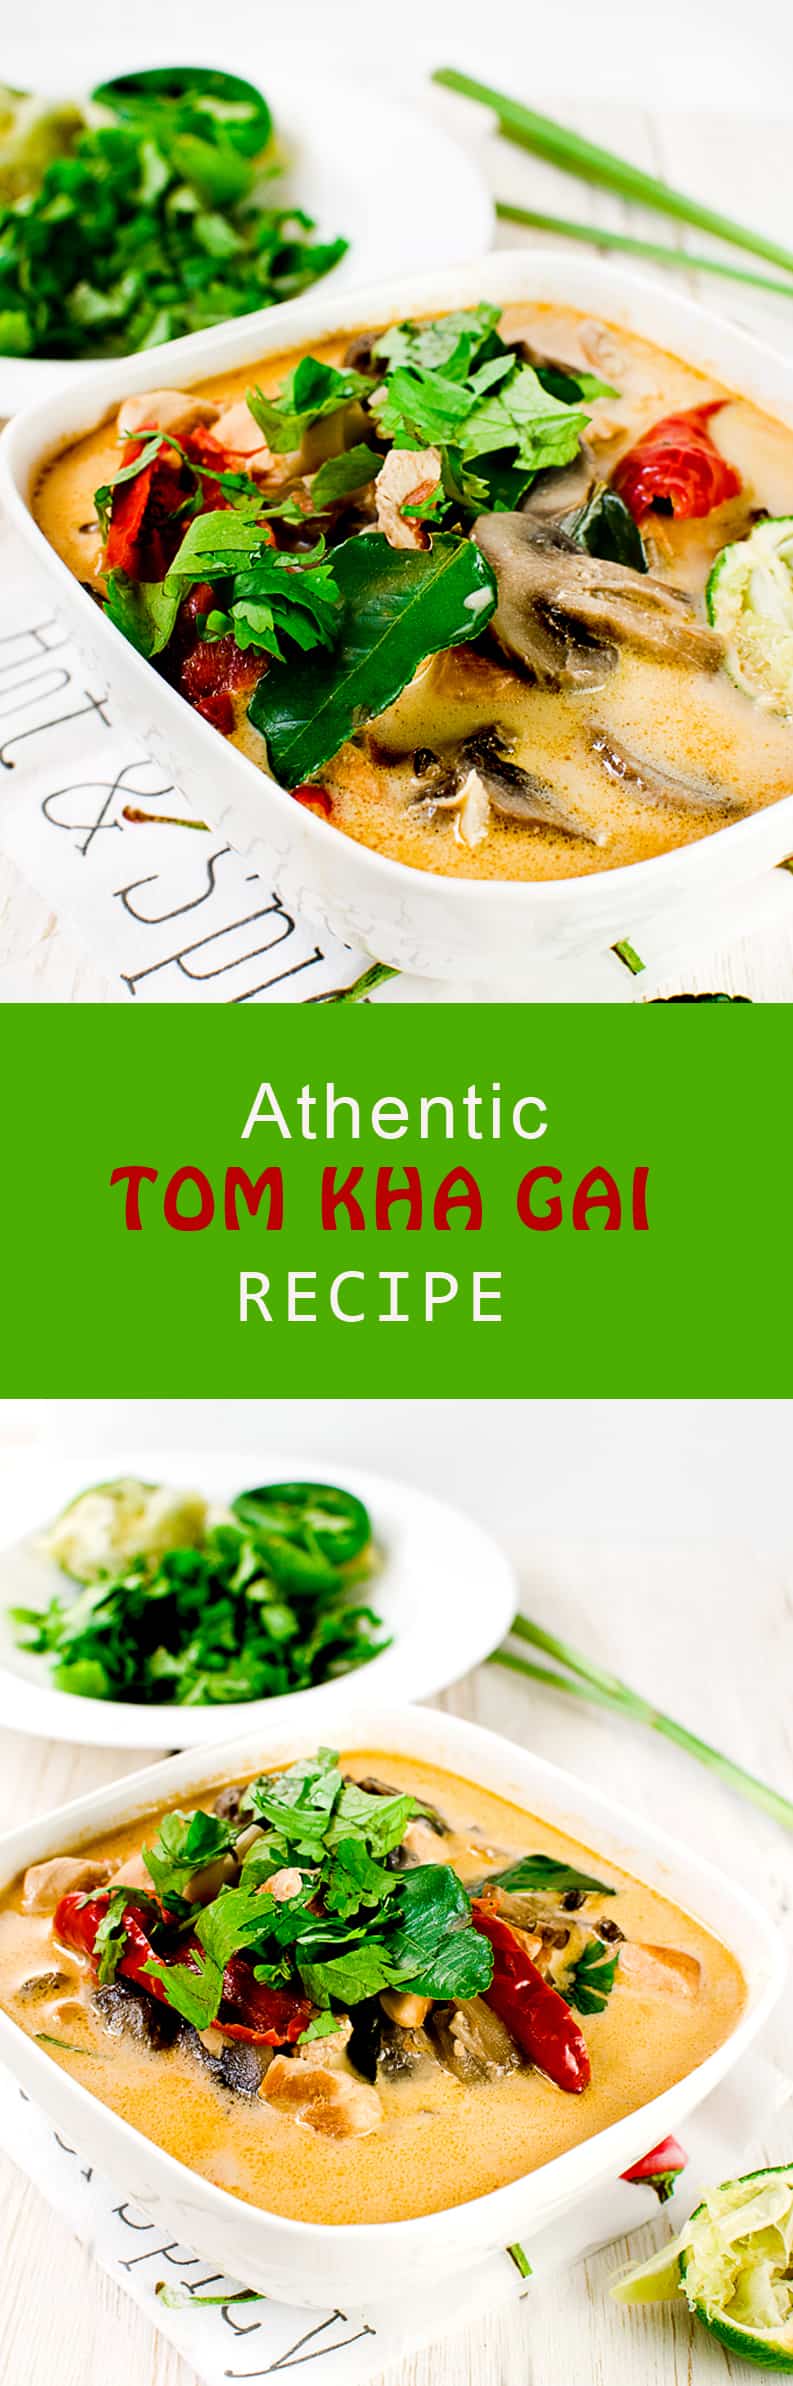 Tom kha gai recipe